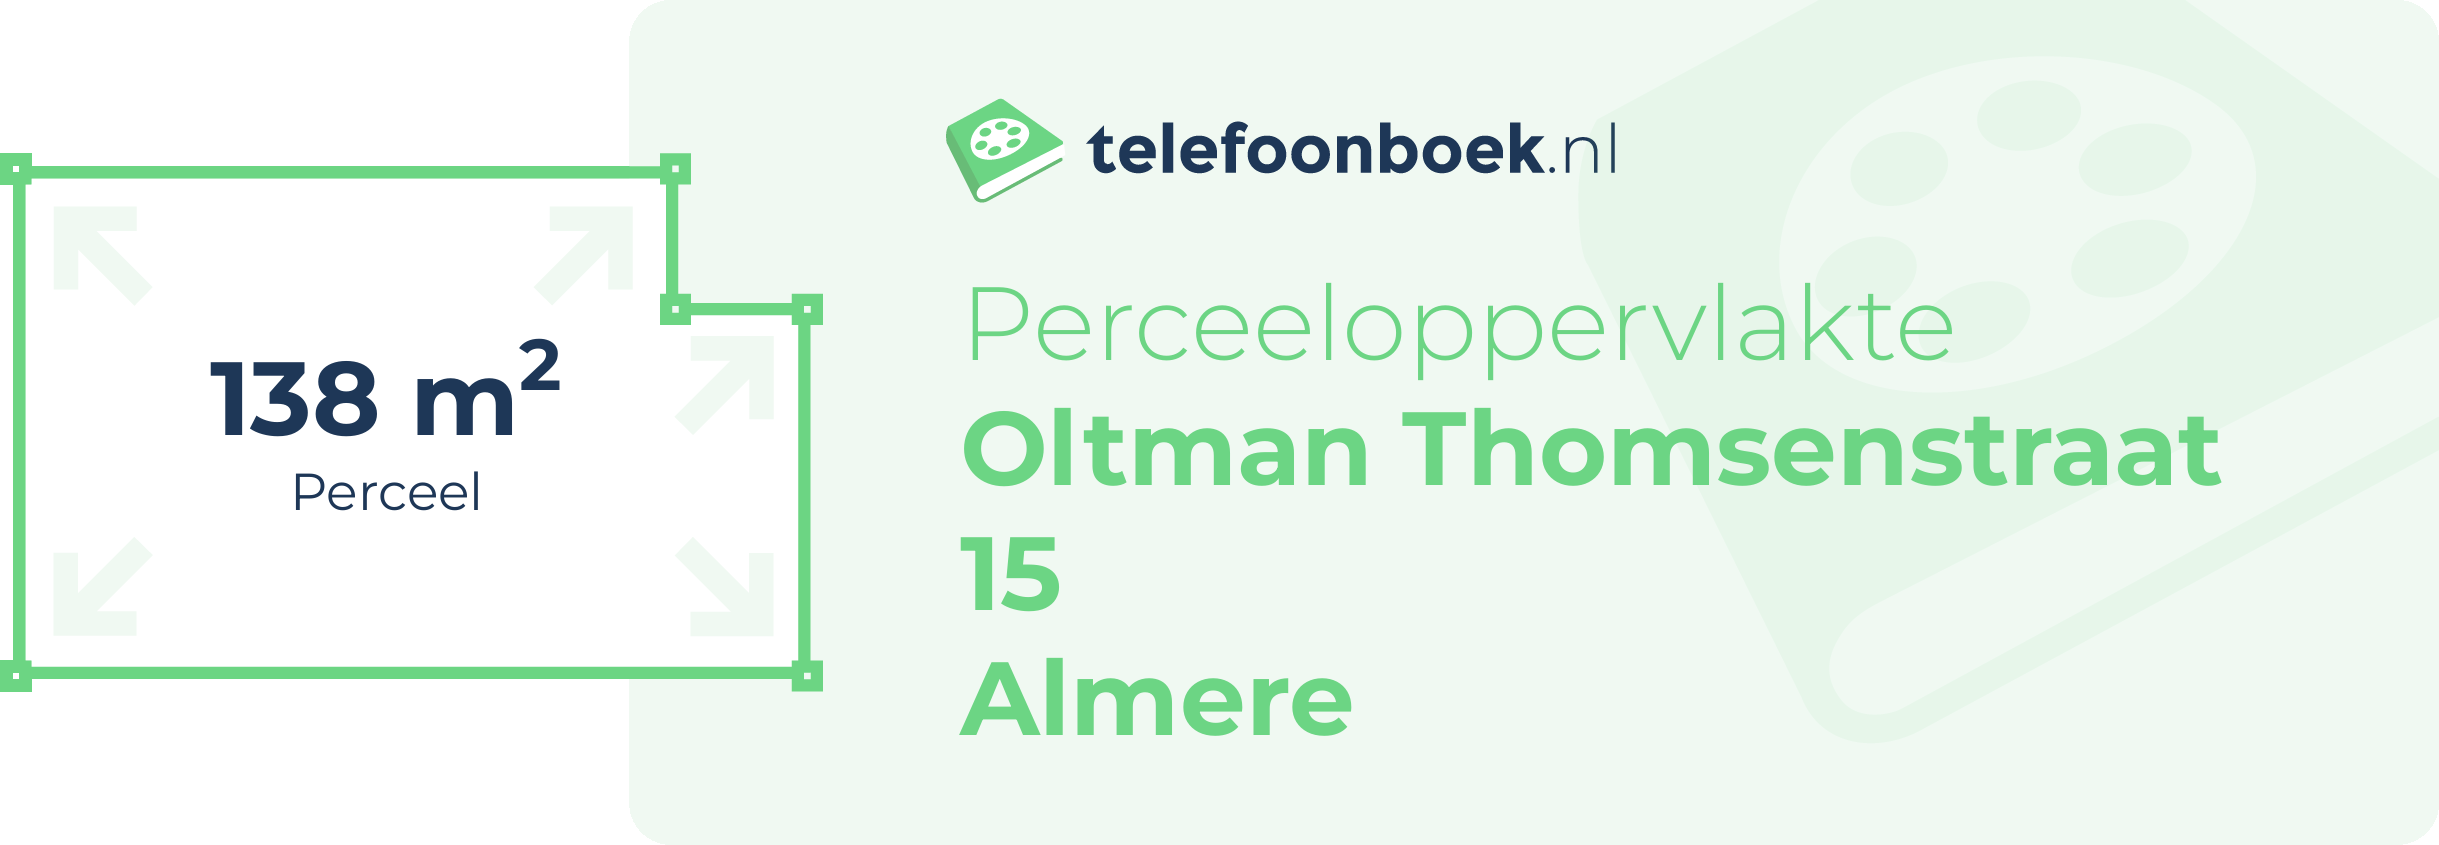 Perceeloppervlakte Oltman Thomsenstraat 15 Almere